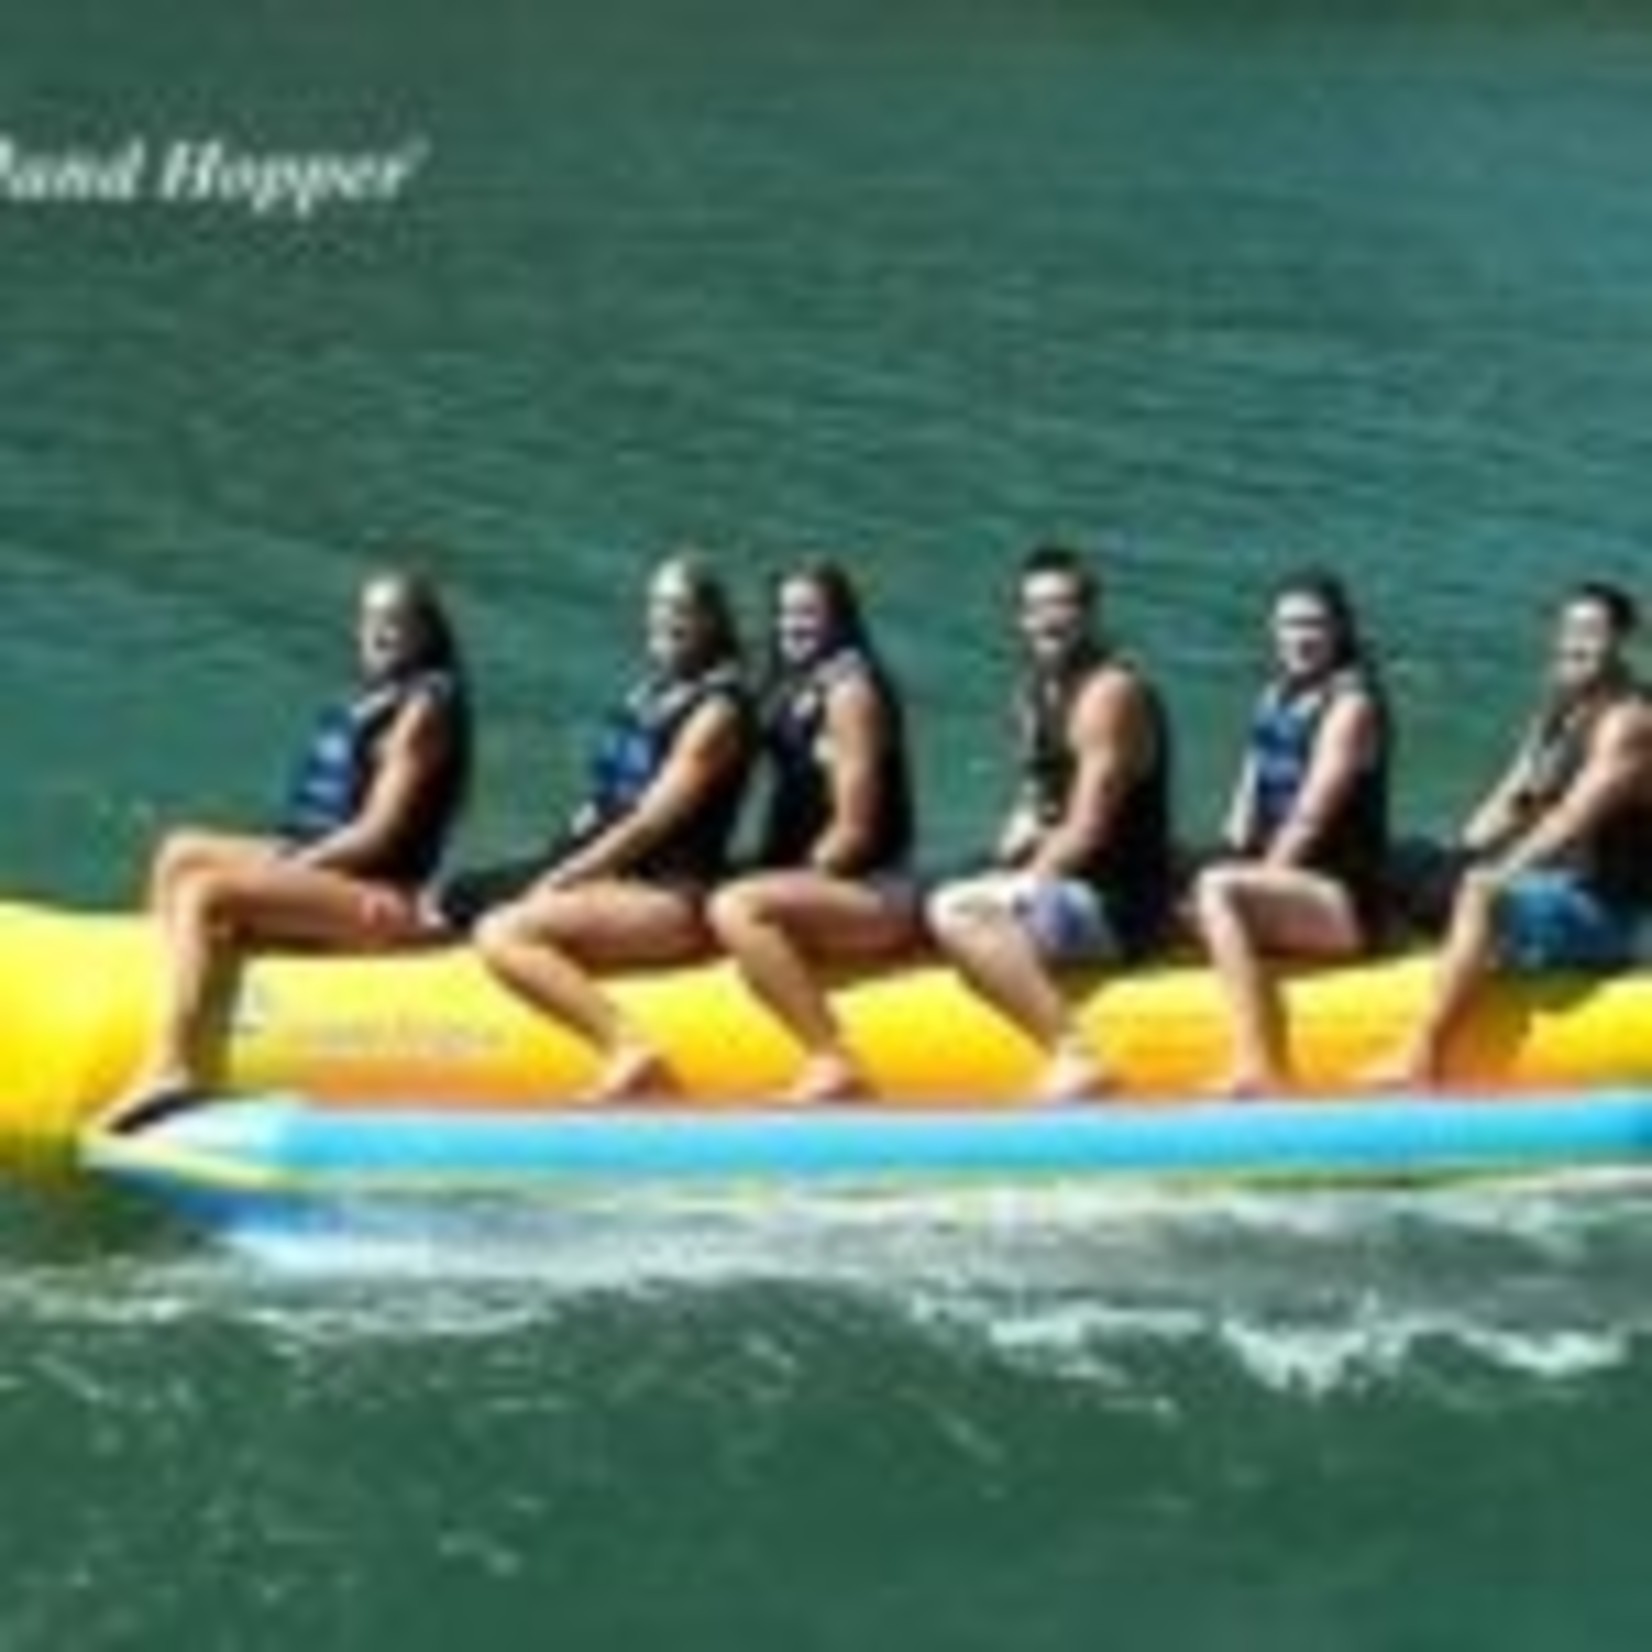 Island Hopper Island Hopper "Heavy Recreational" 6 Passenger Banana Boat